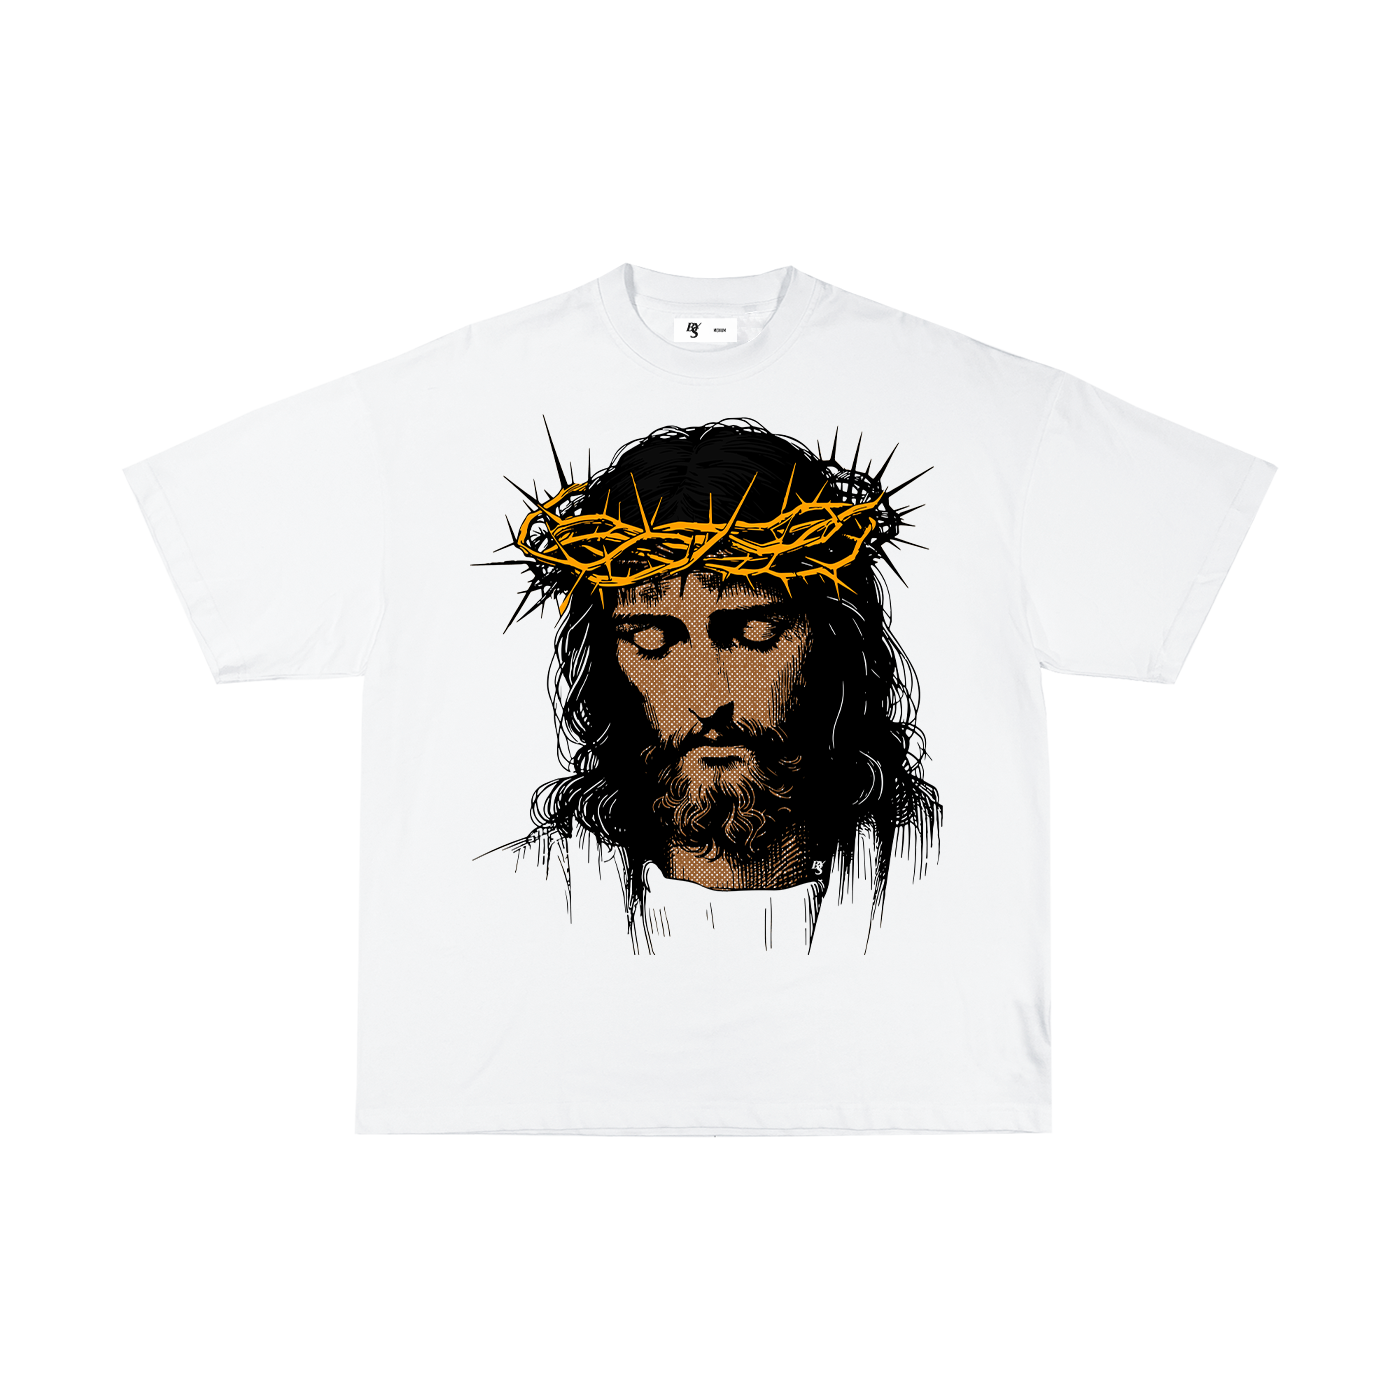 Jesus Face T-Shirt - Off White (Shipping Immediately)